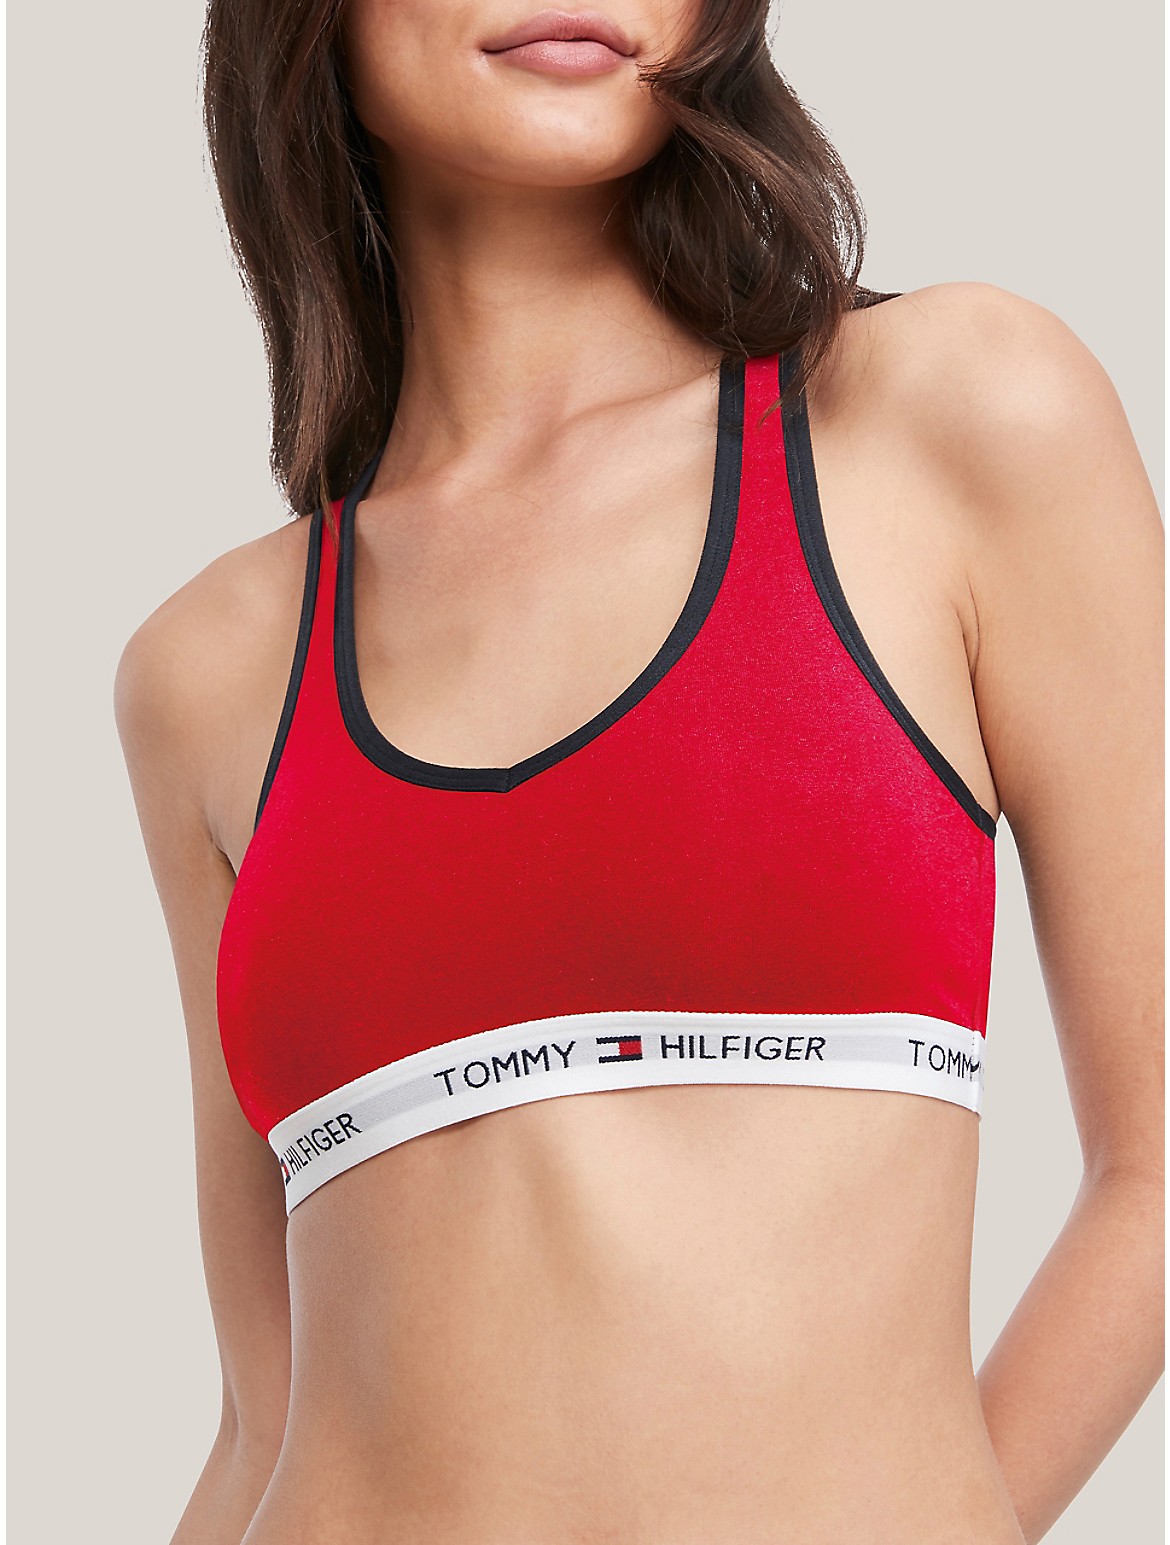 Tommy Hilfiger Women's Tommy Logo Bralette - Red - L